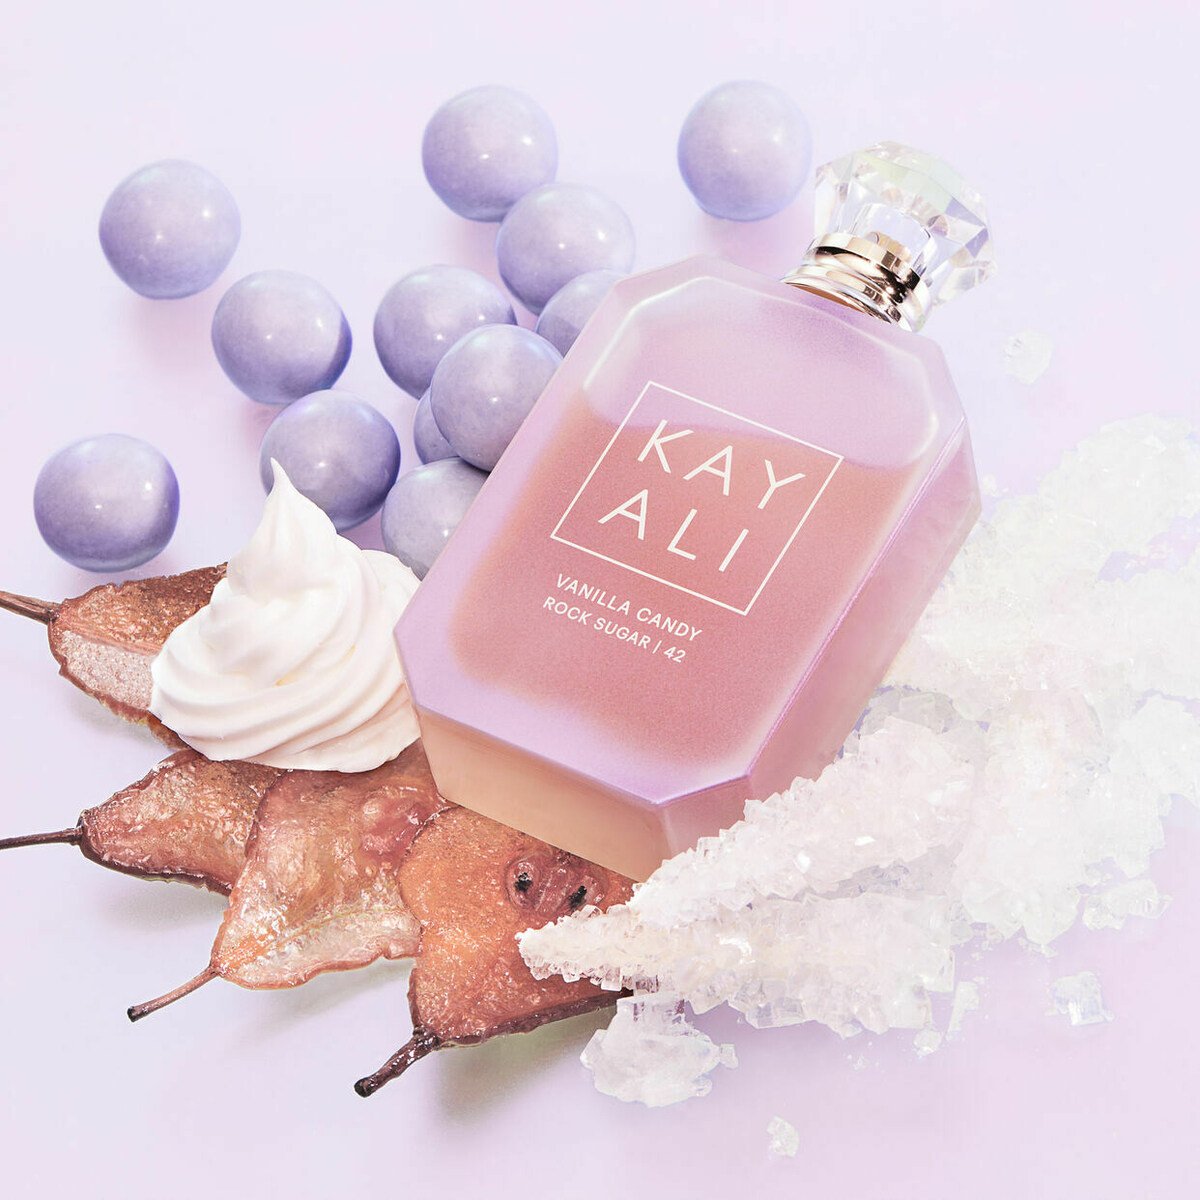 KAYALI Vanilla Candy Rock Sugar 42 Eau de Parfum